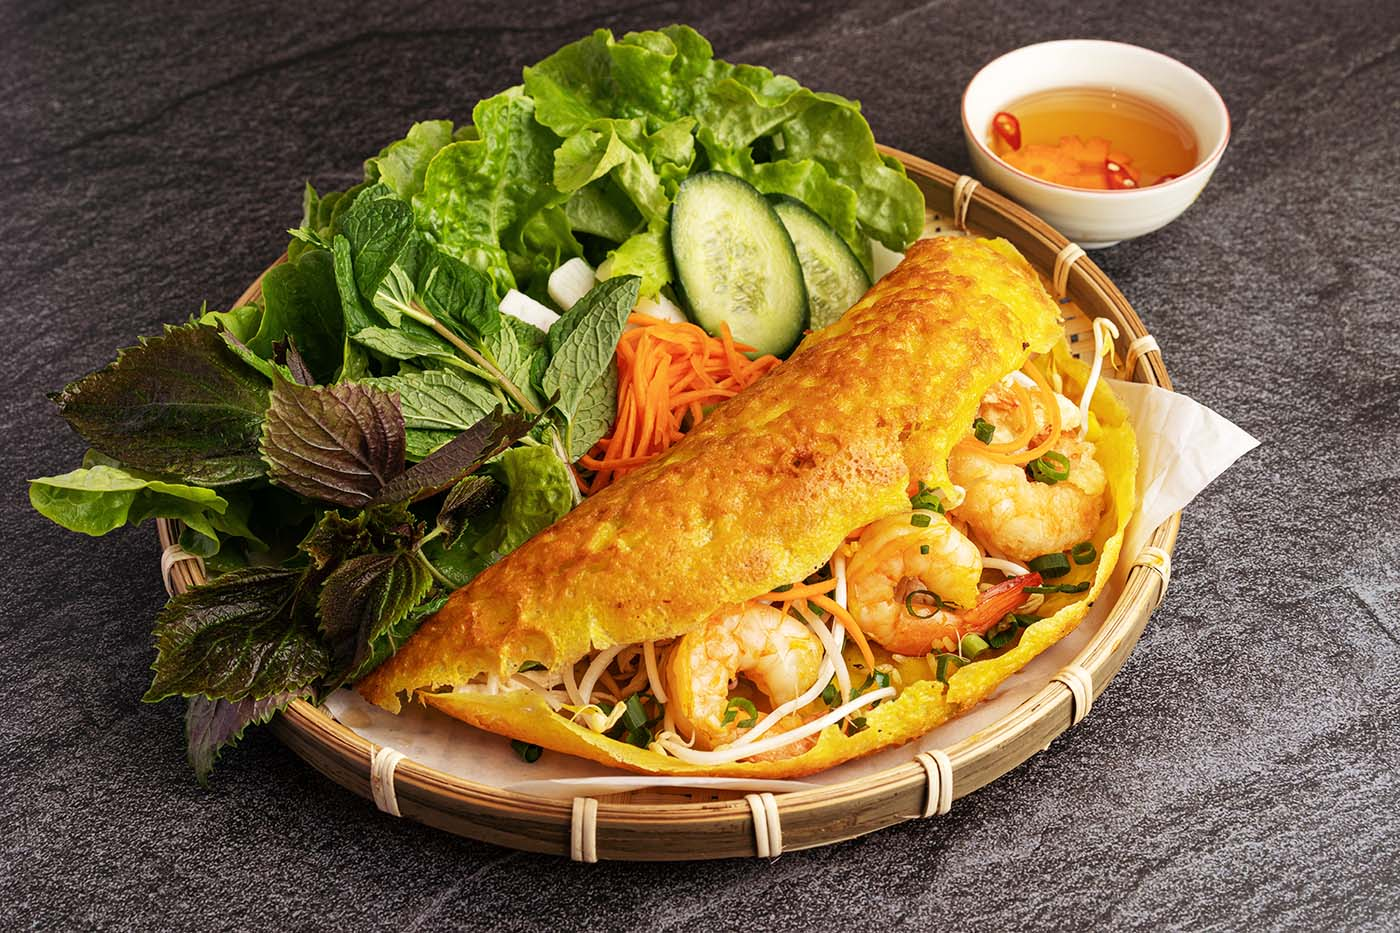 Banh Xeo served with chili padi and fish sauce